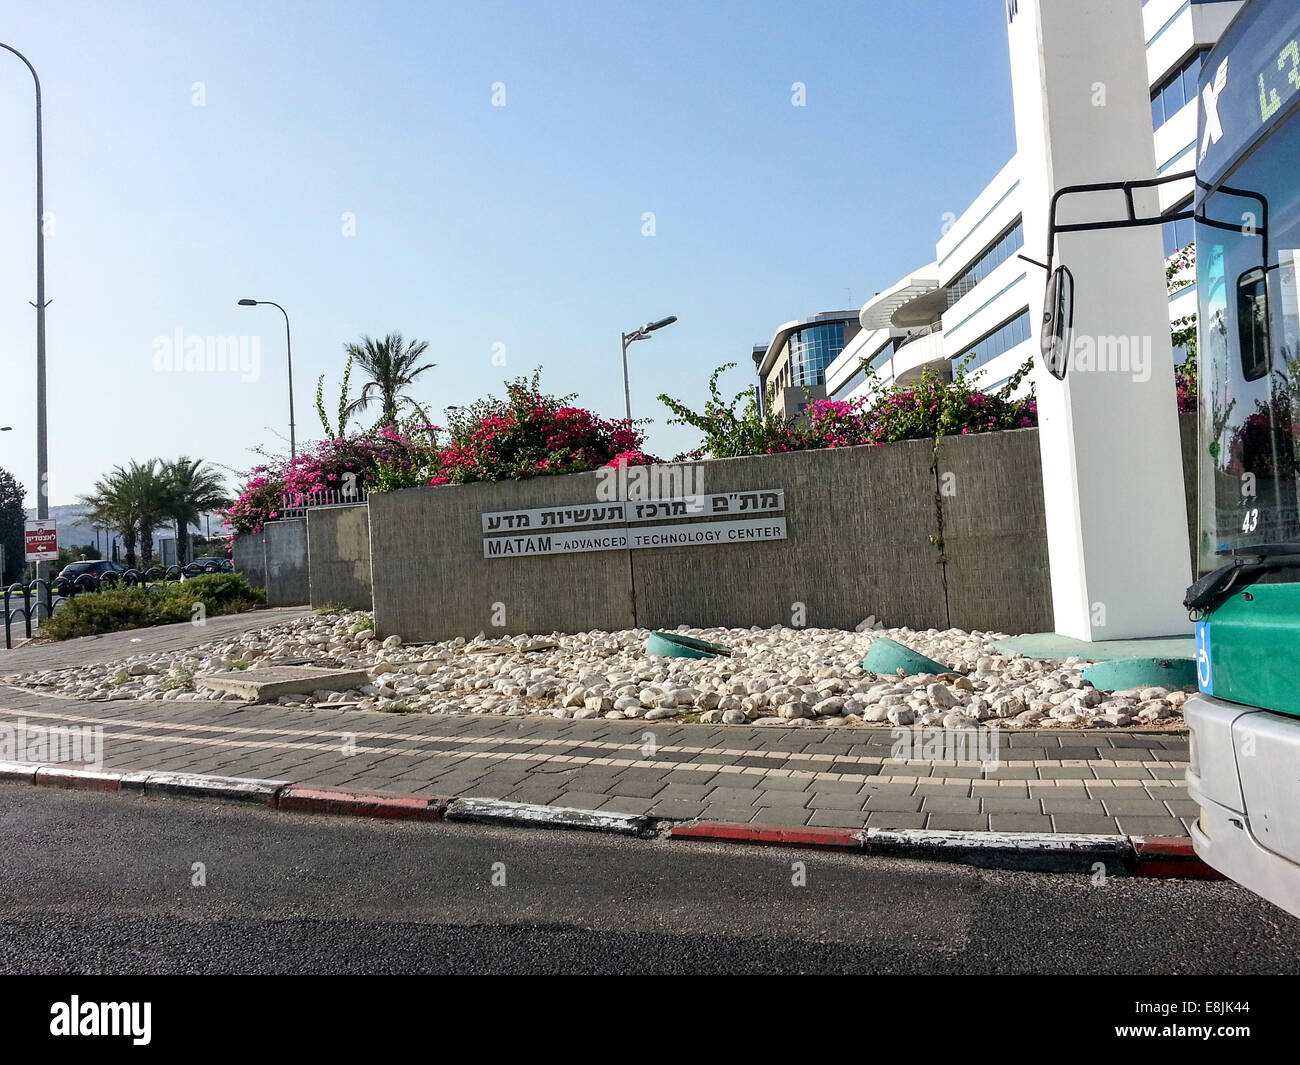 Israel, Haifa, Matam - Advanced Technology Center Stock Photo - Alamy